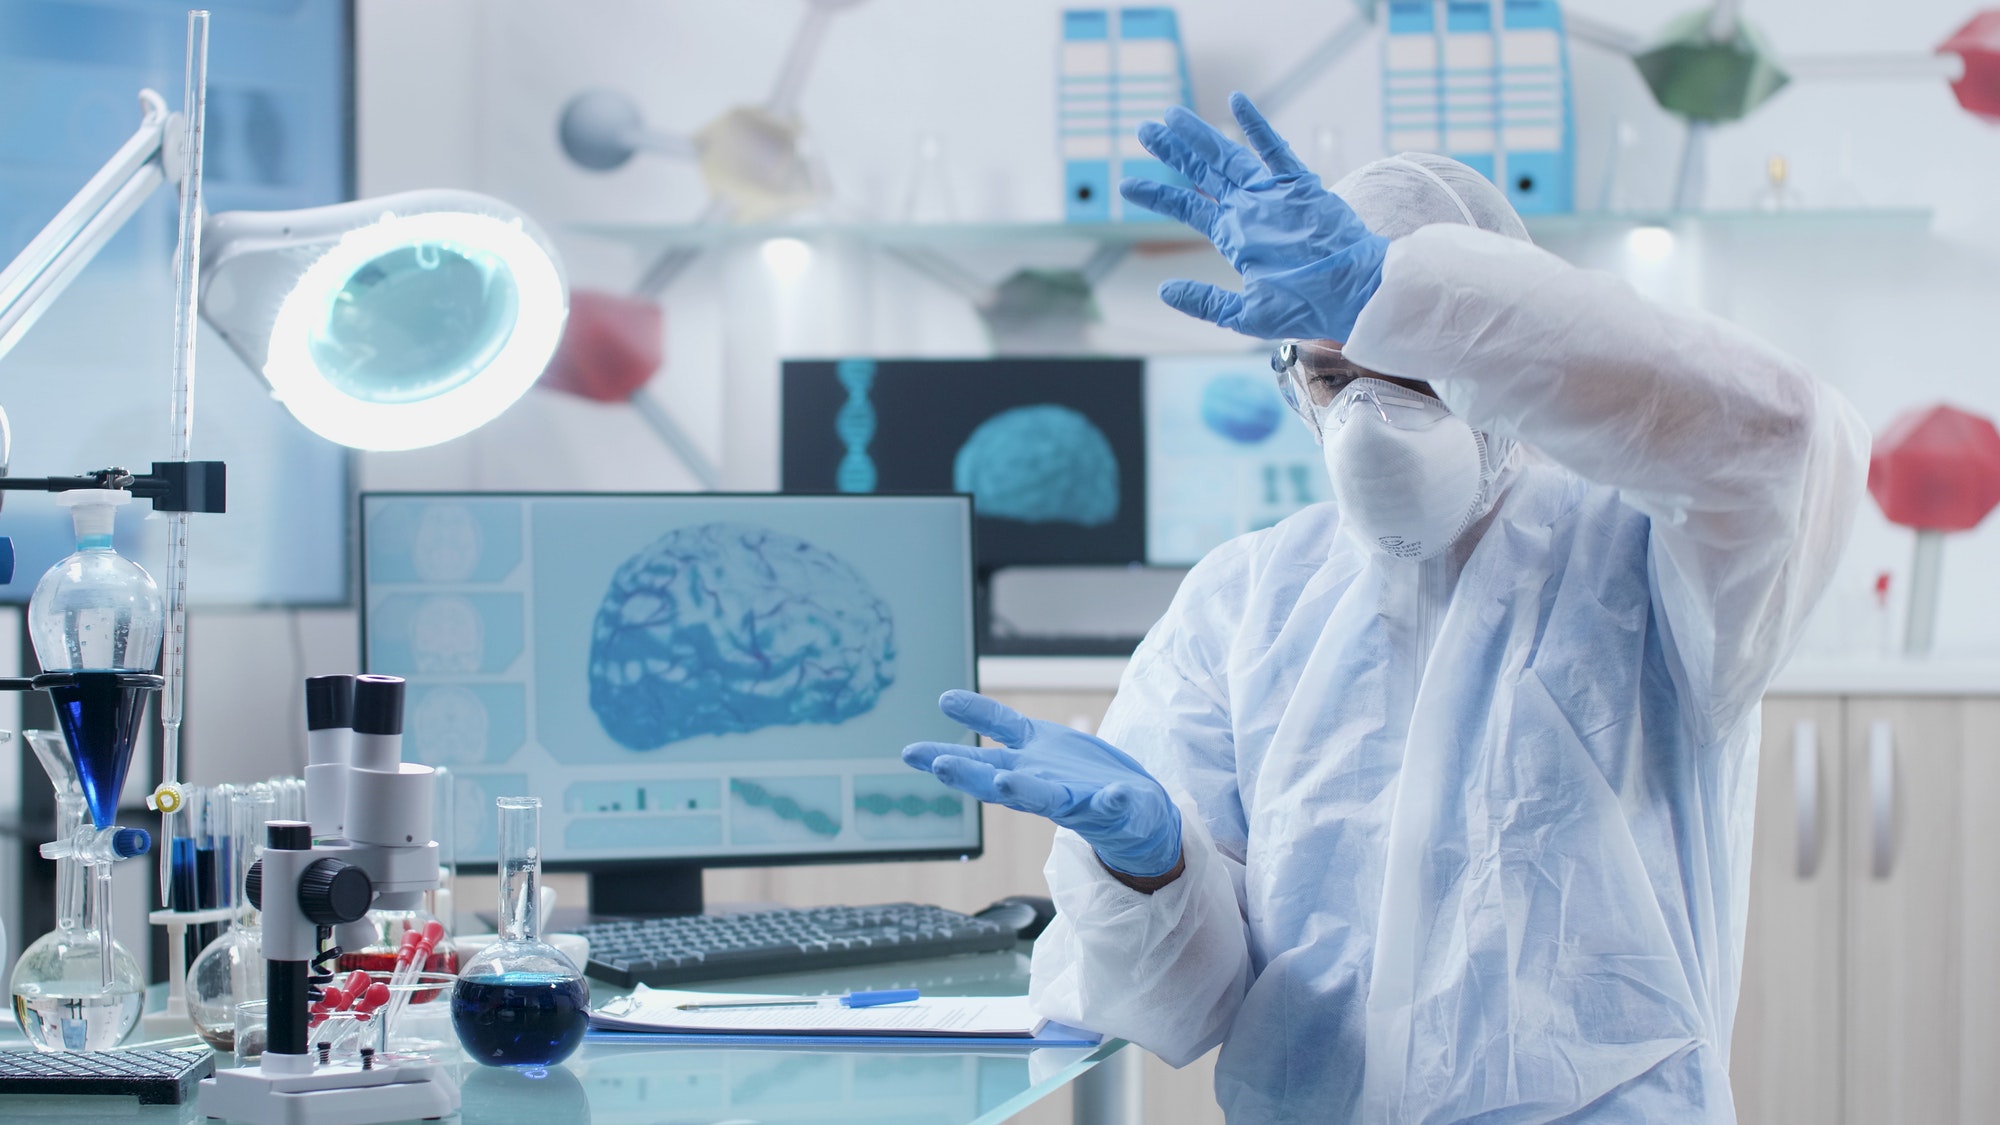 Neurologist scientist researcher analyzing brain activity during neuroscience experiment